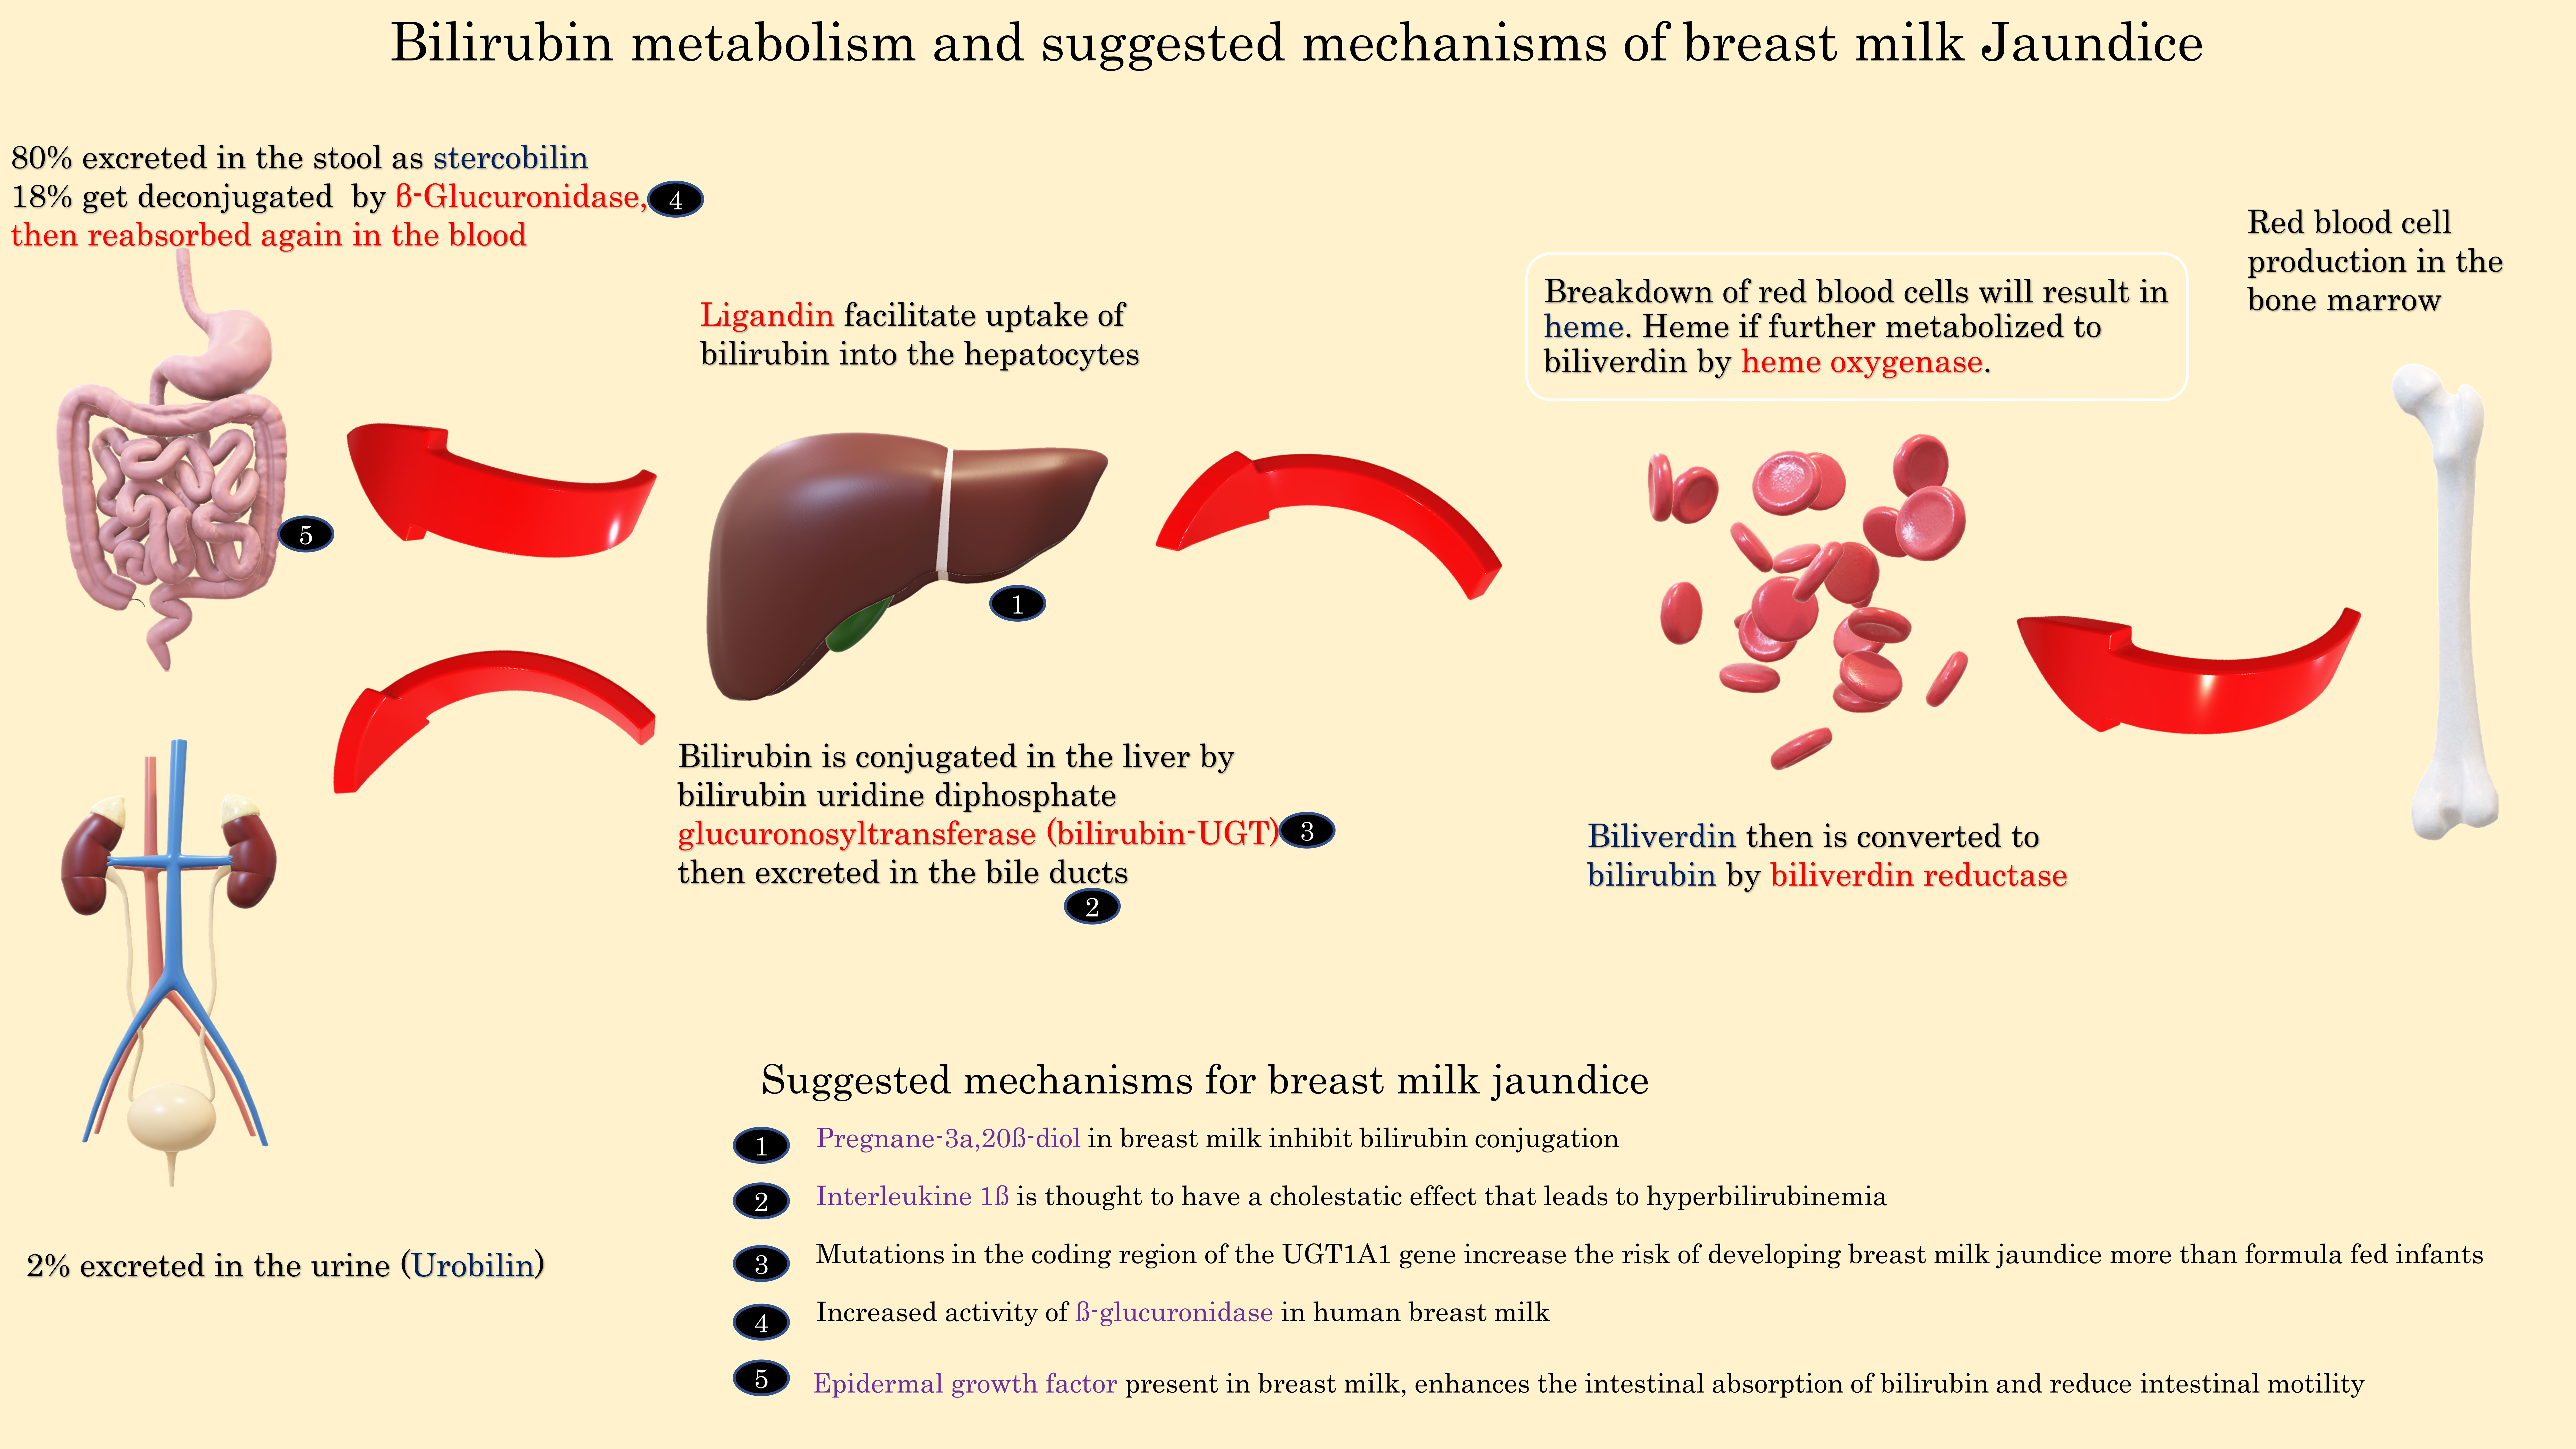 Figure 1: A summary of bilirubin metabolism and suggested mechanisms of breast milk Jaundice
